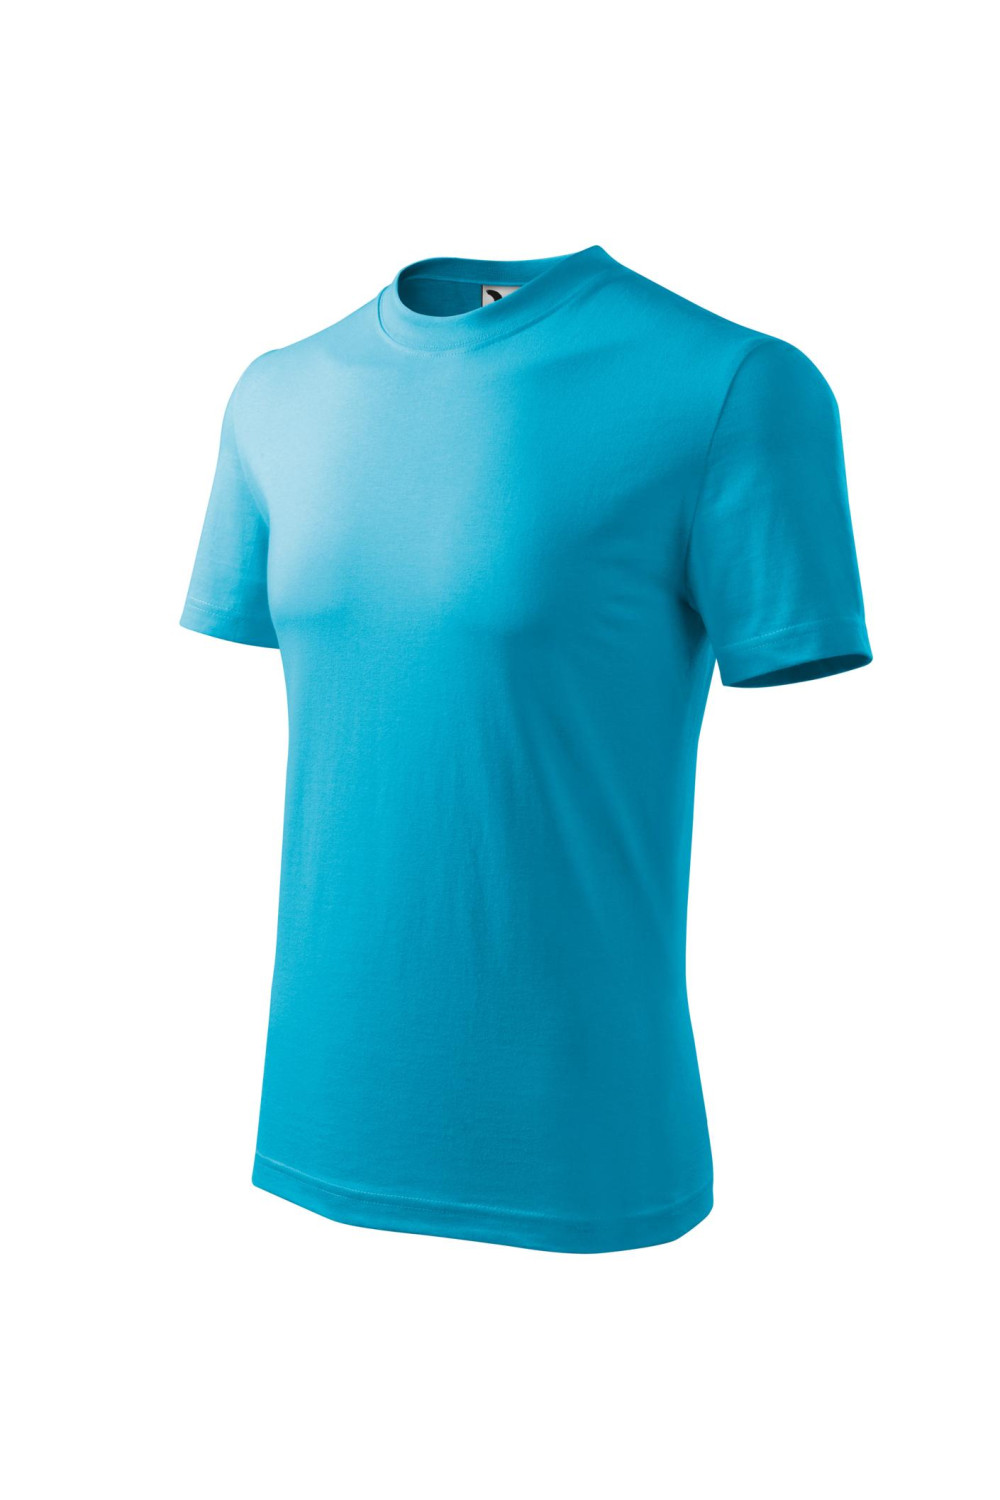 HEAVY 110 MALFINI ADLER Koszulka t-shirt unisex 100% bawełna turkus